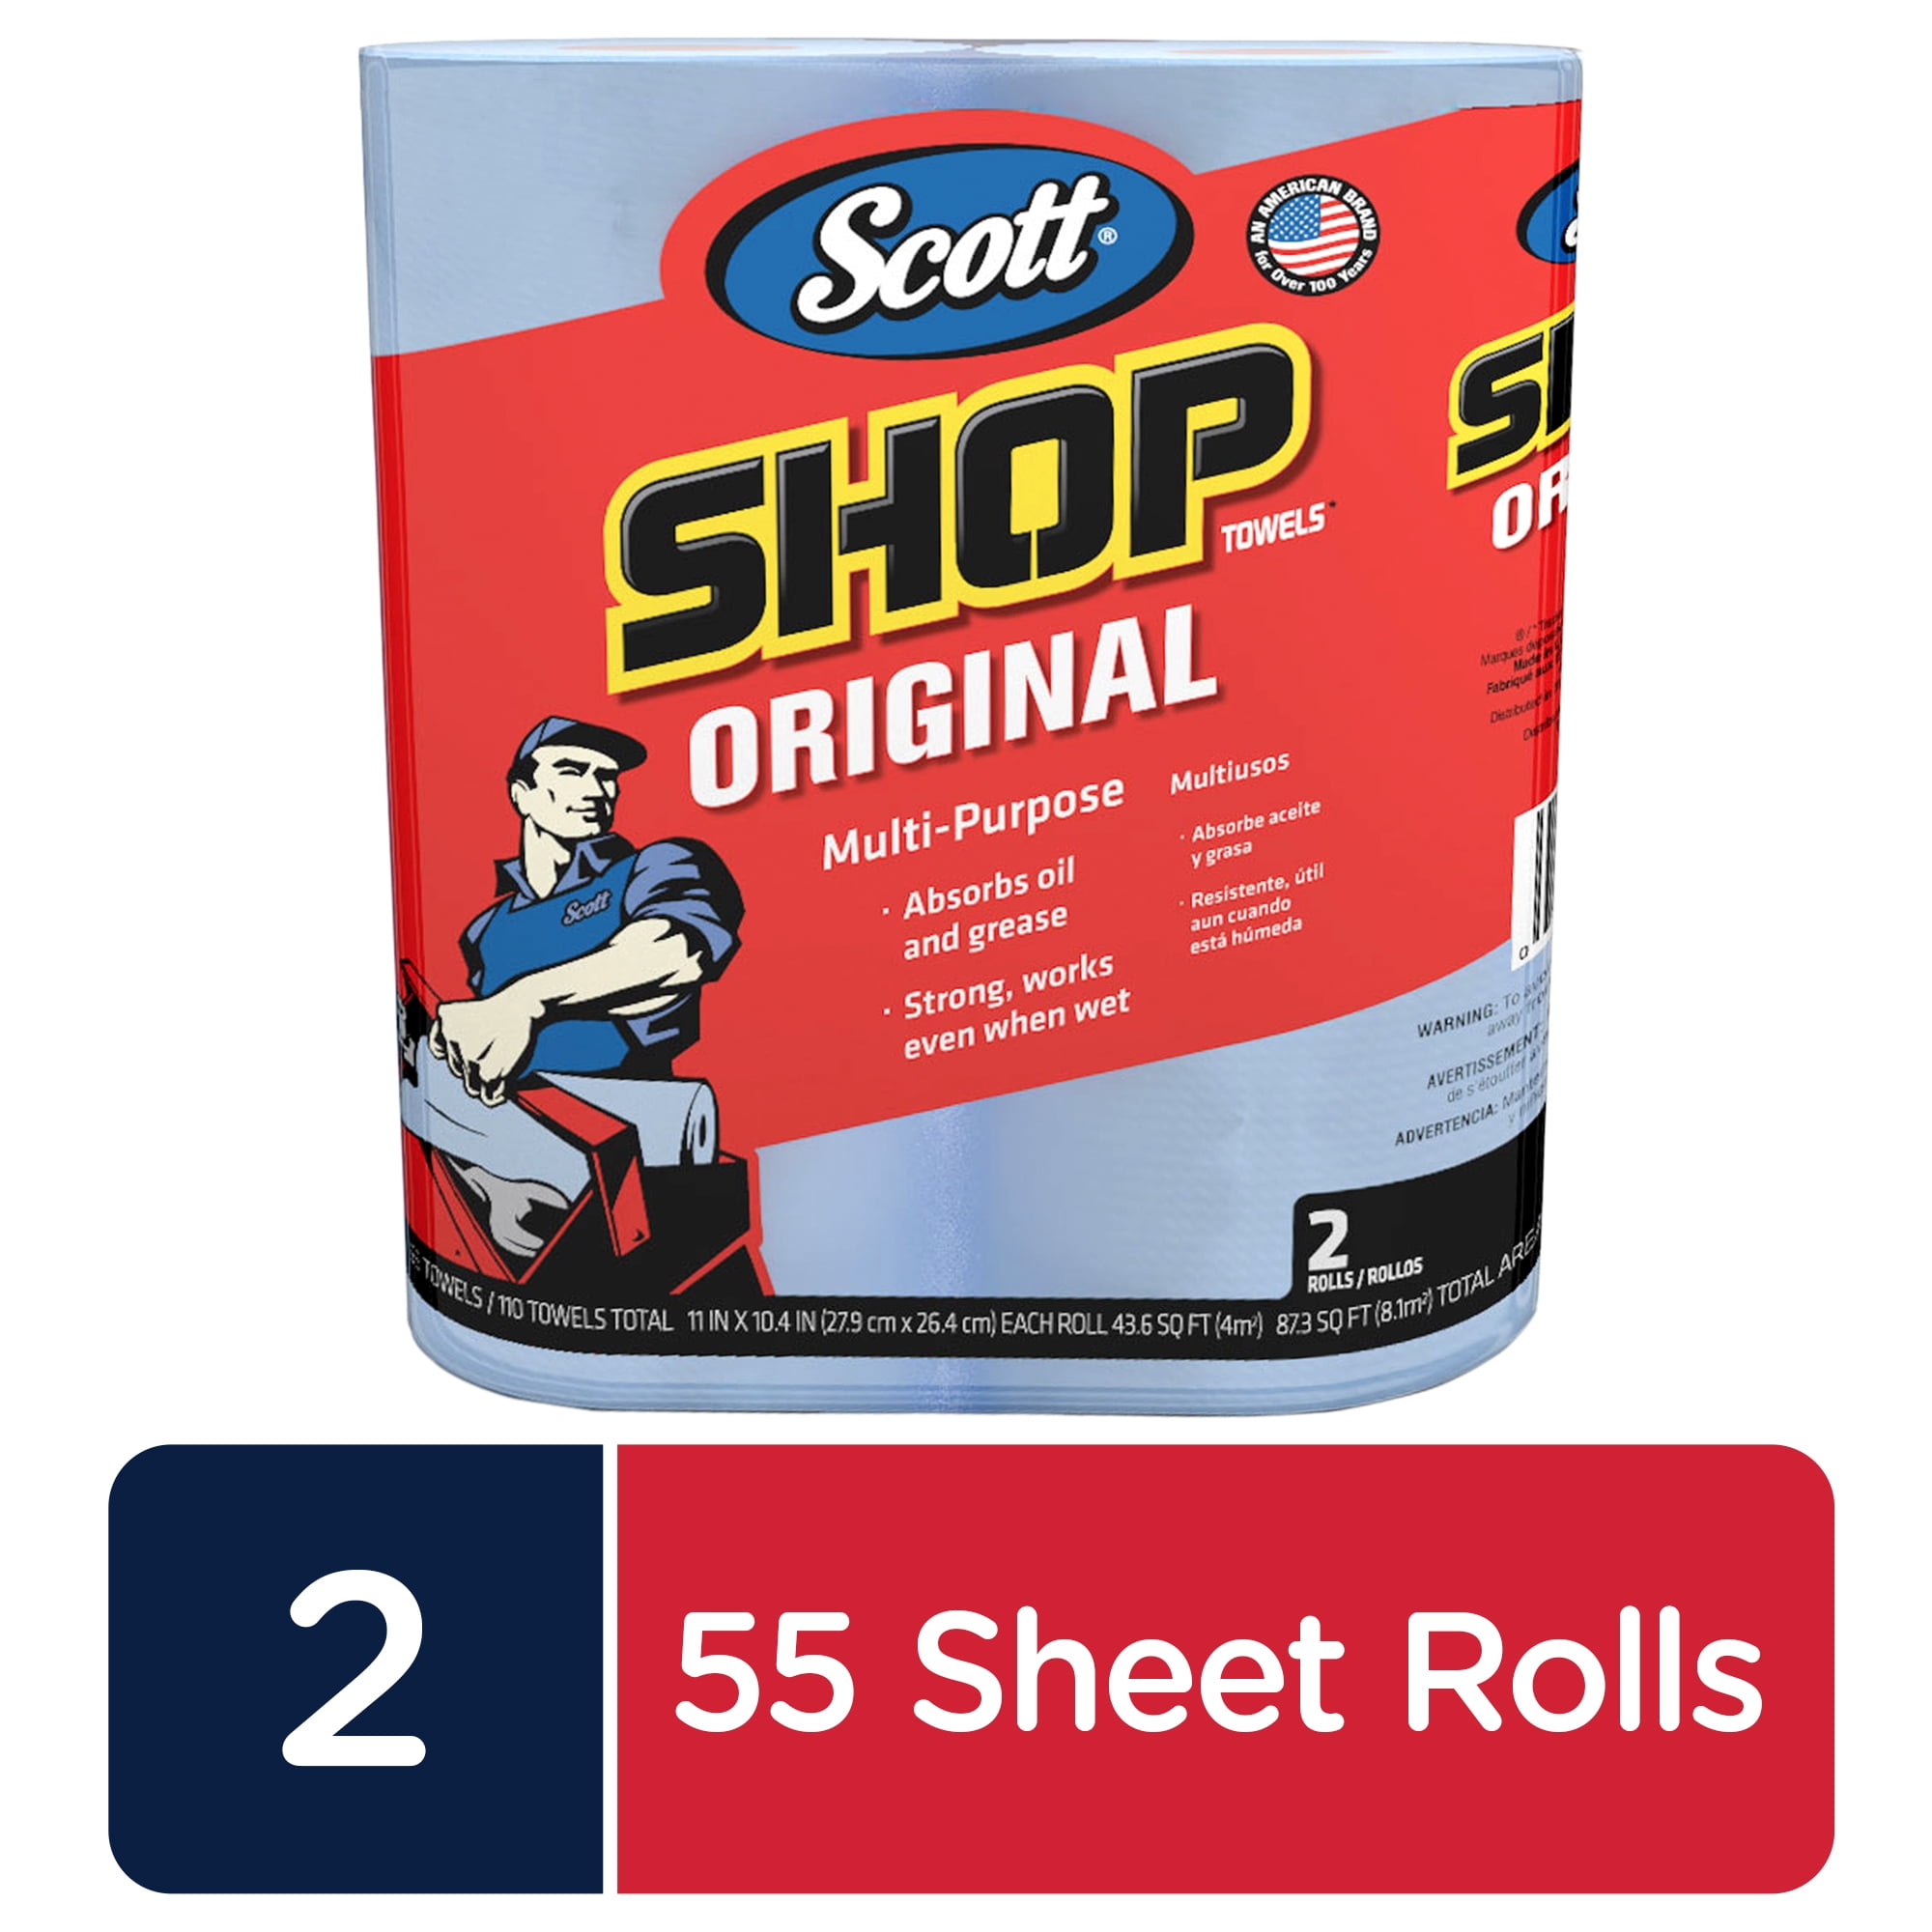 Scott Professional Multi-Purpose Shop Towels 55 Sheets per Roll 6 Ct 